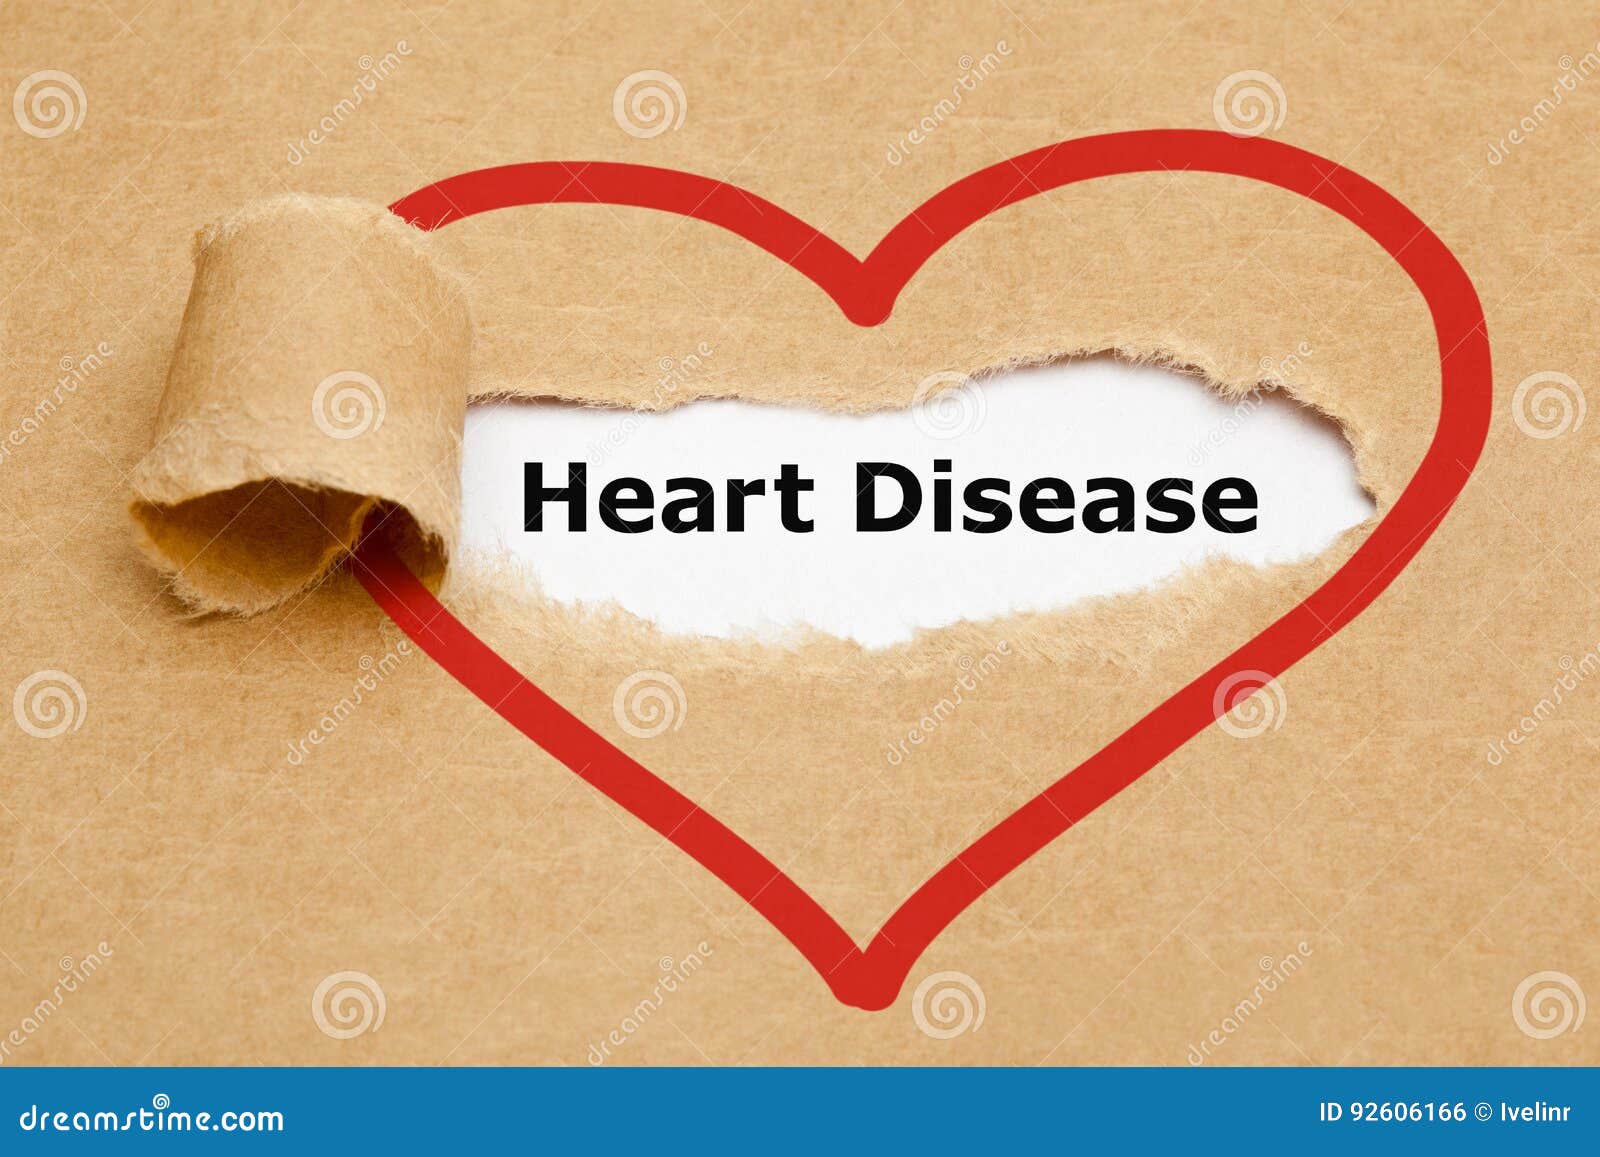 heart disease torn paper